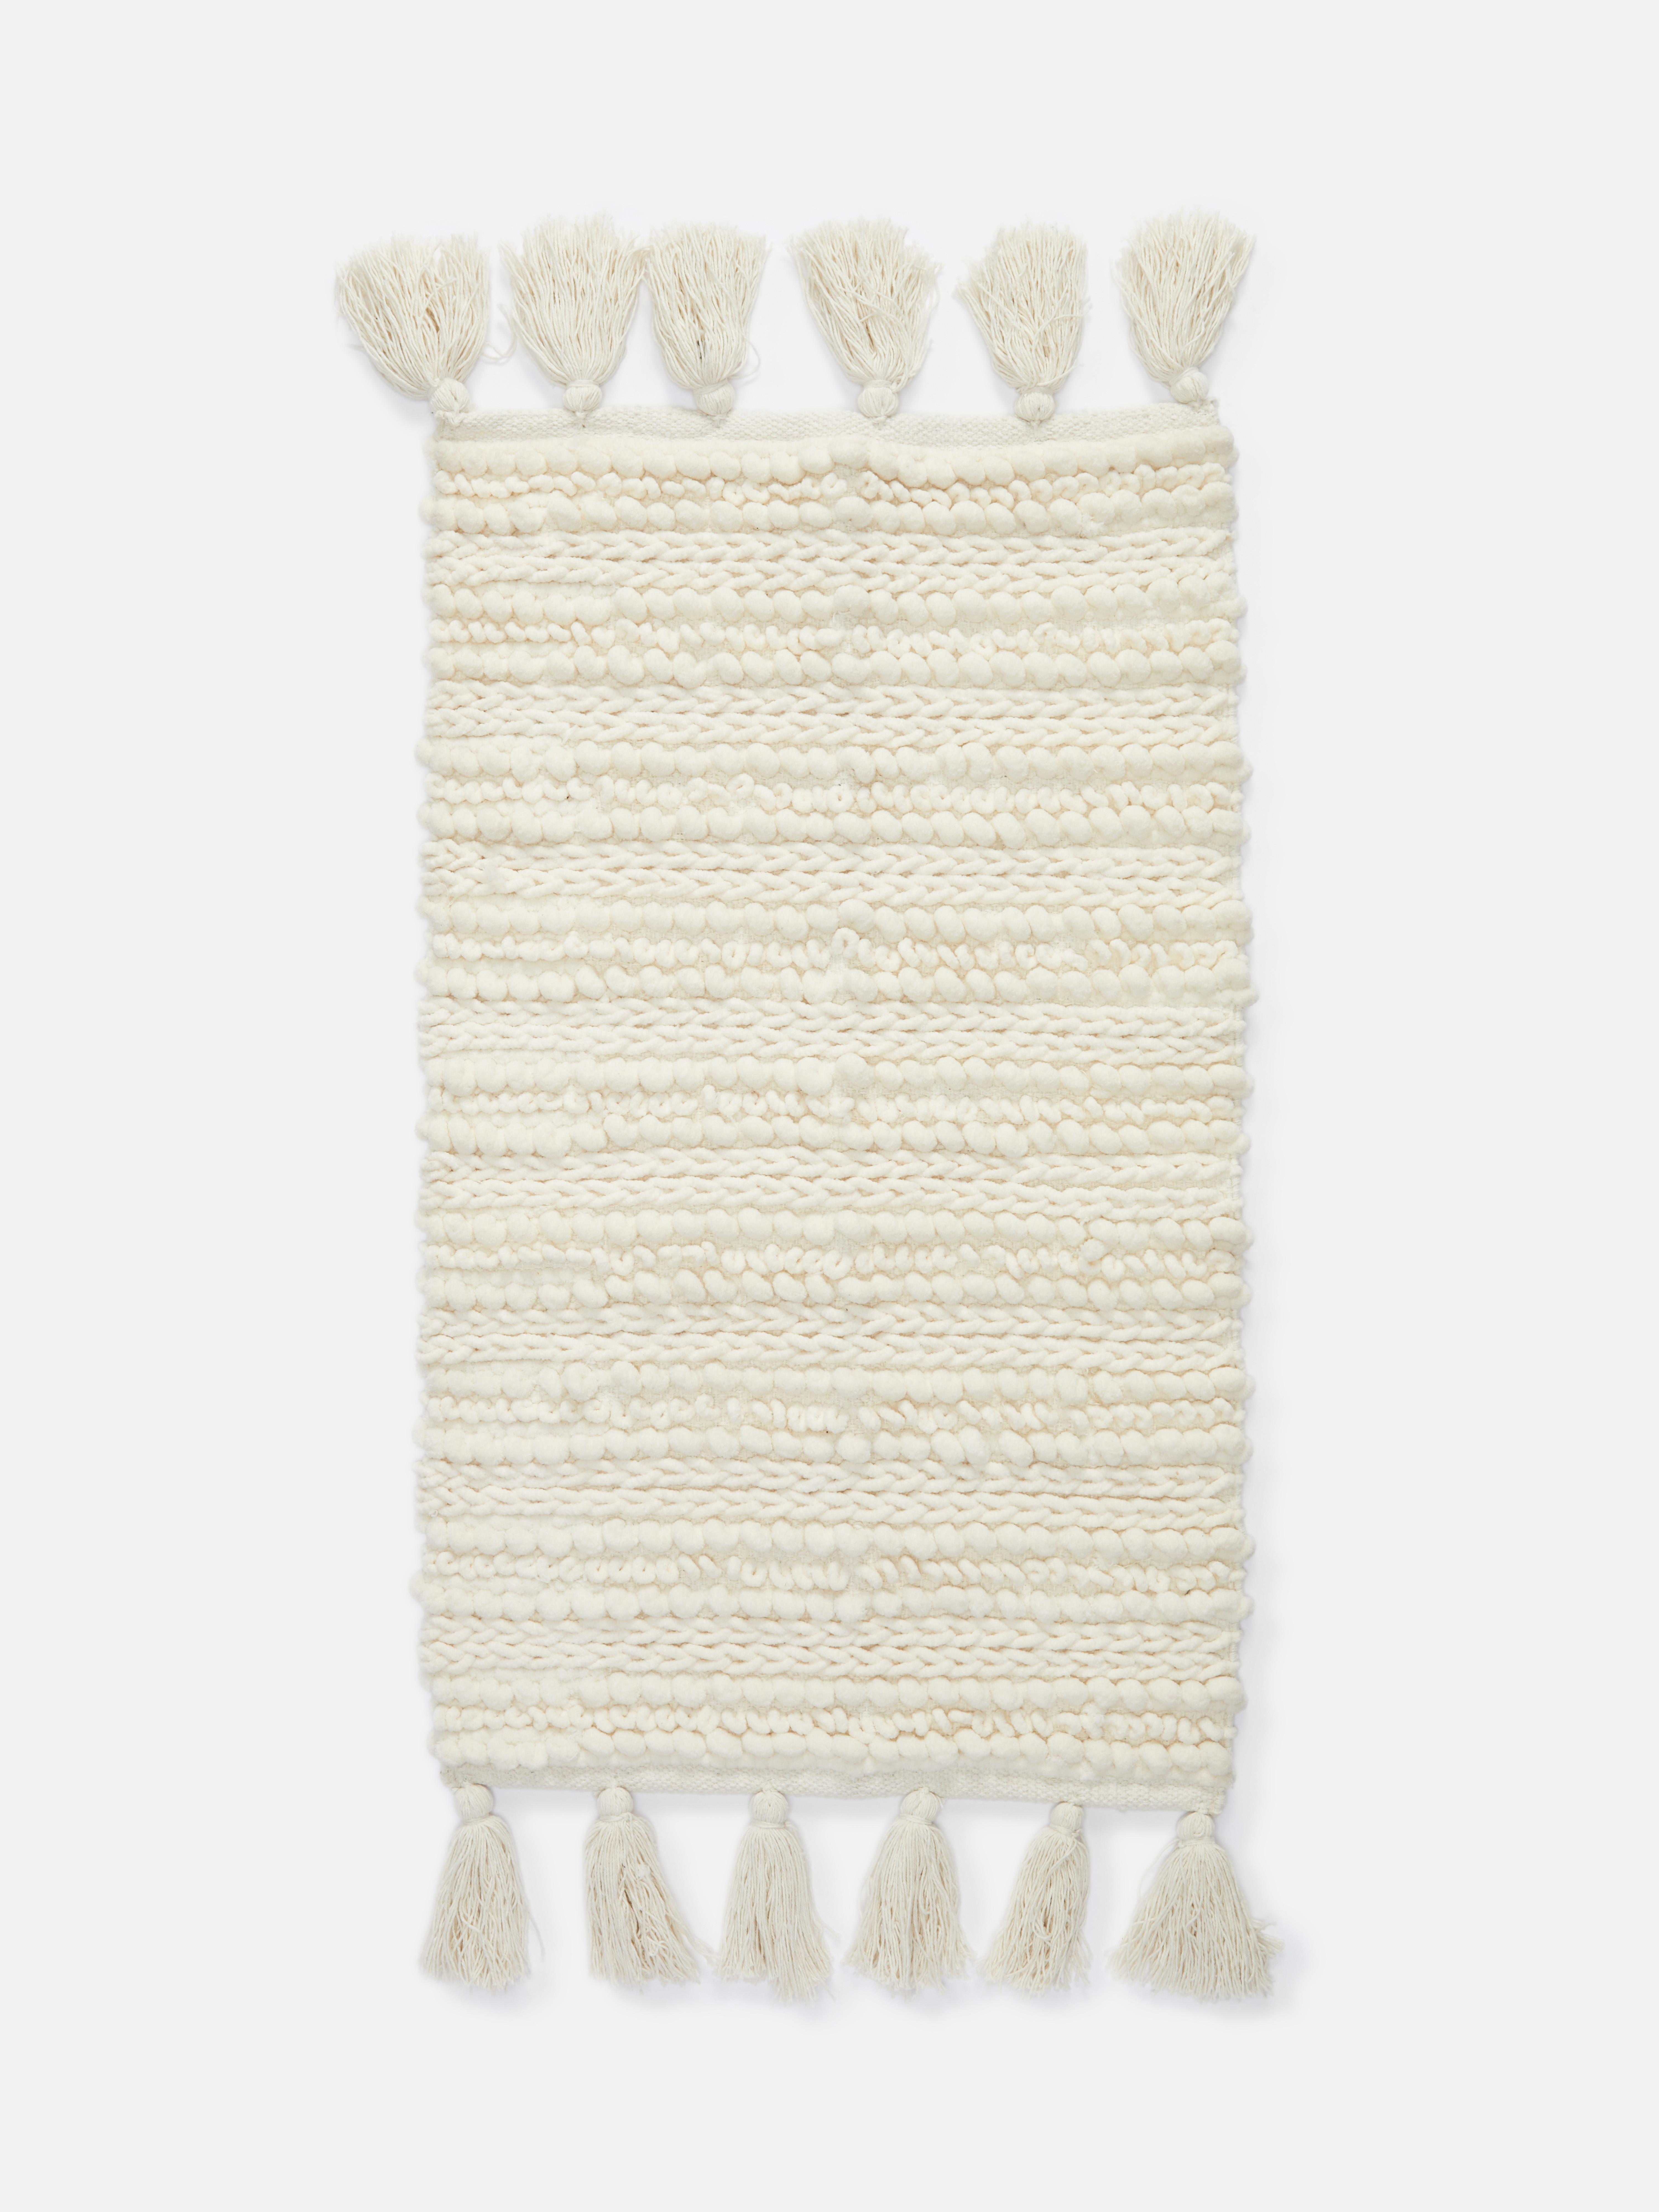 Knit Mat With Tassels